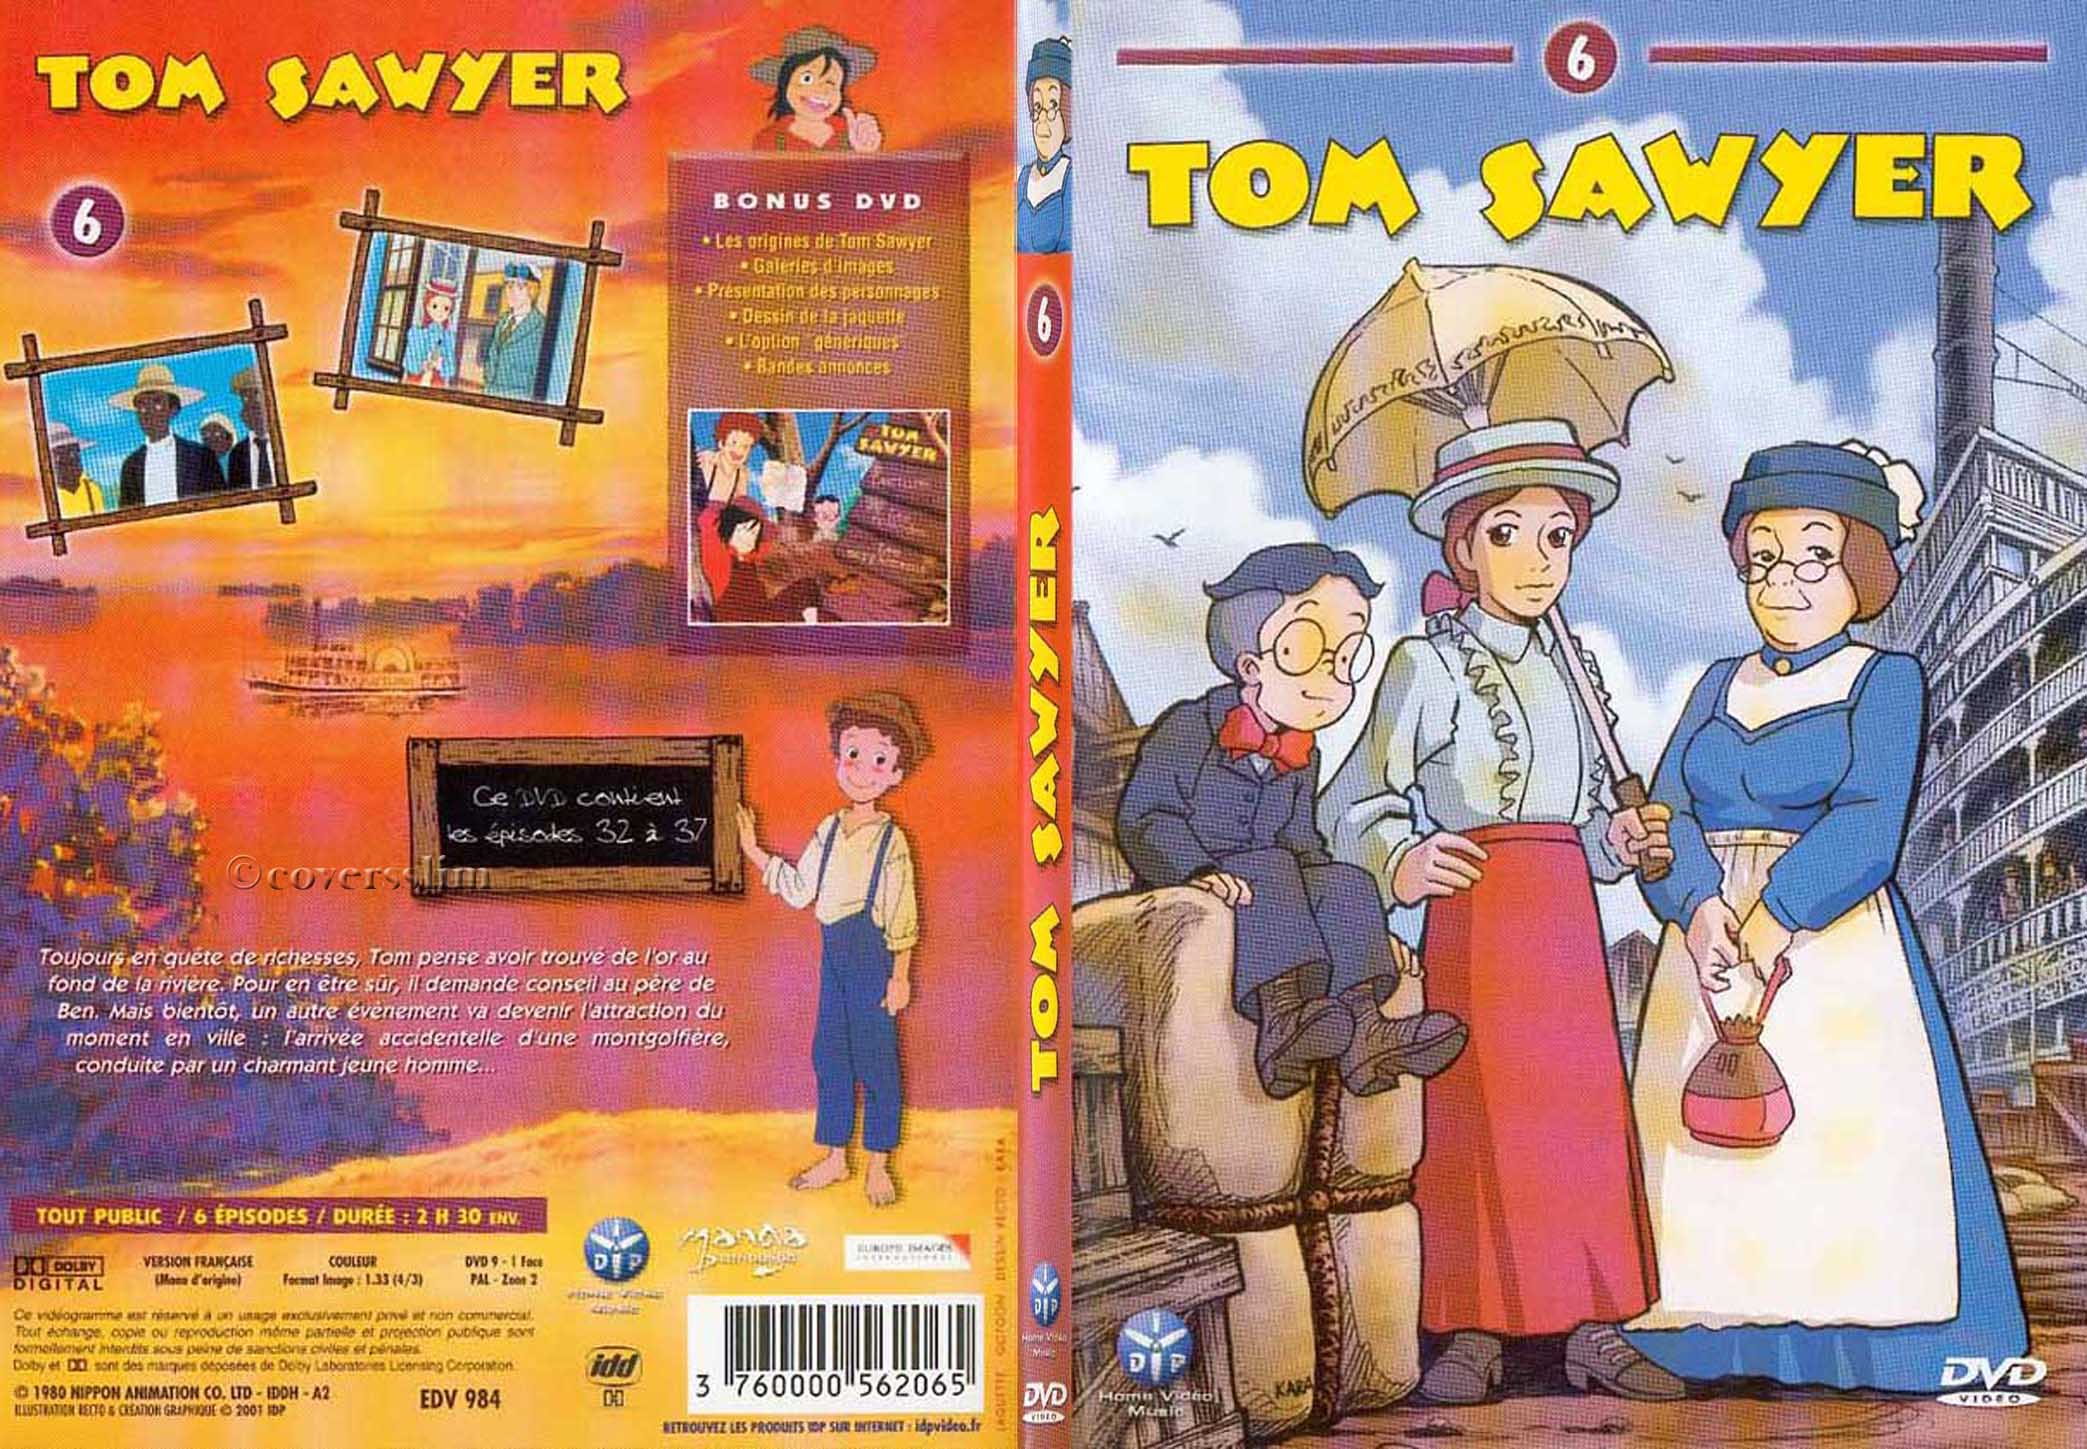 Jaquette DVD Tom Sawyer vol 6 - SLIM v2